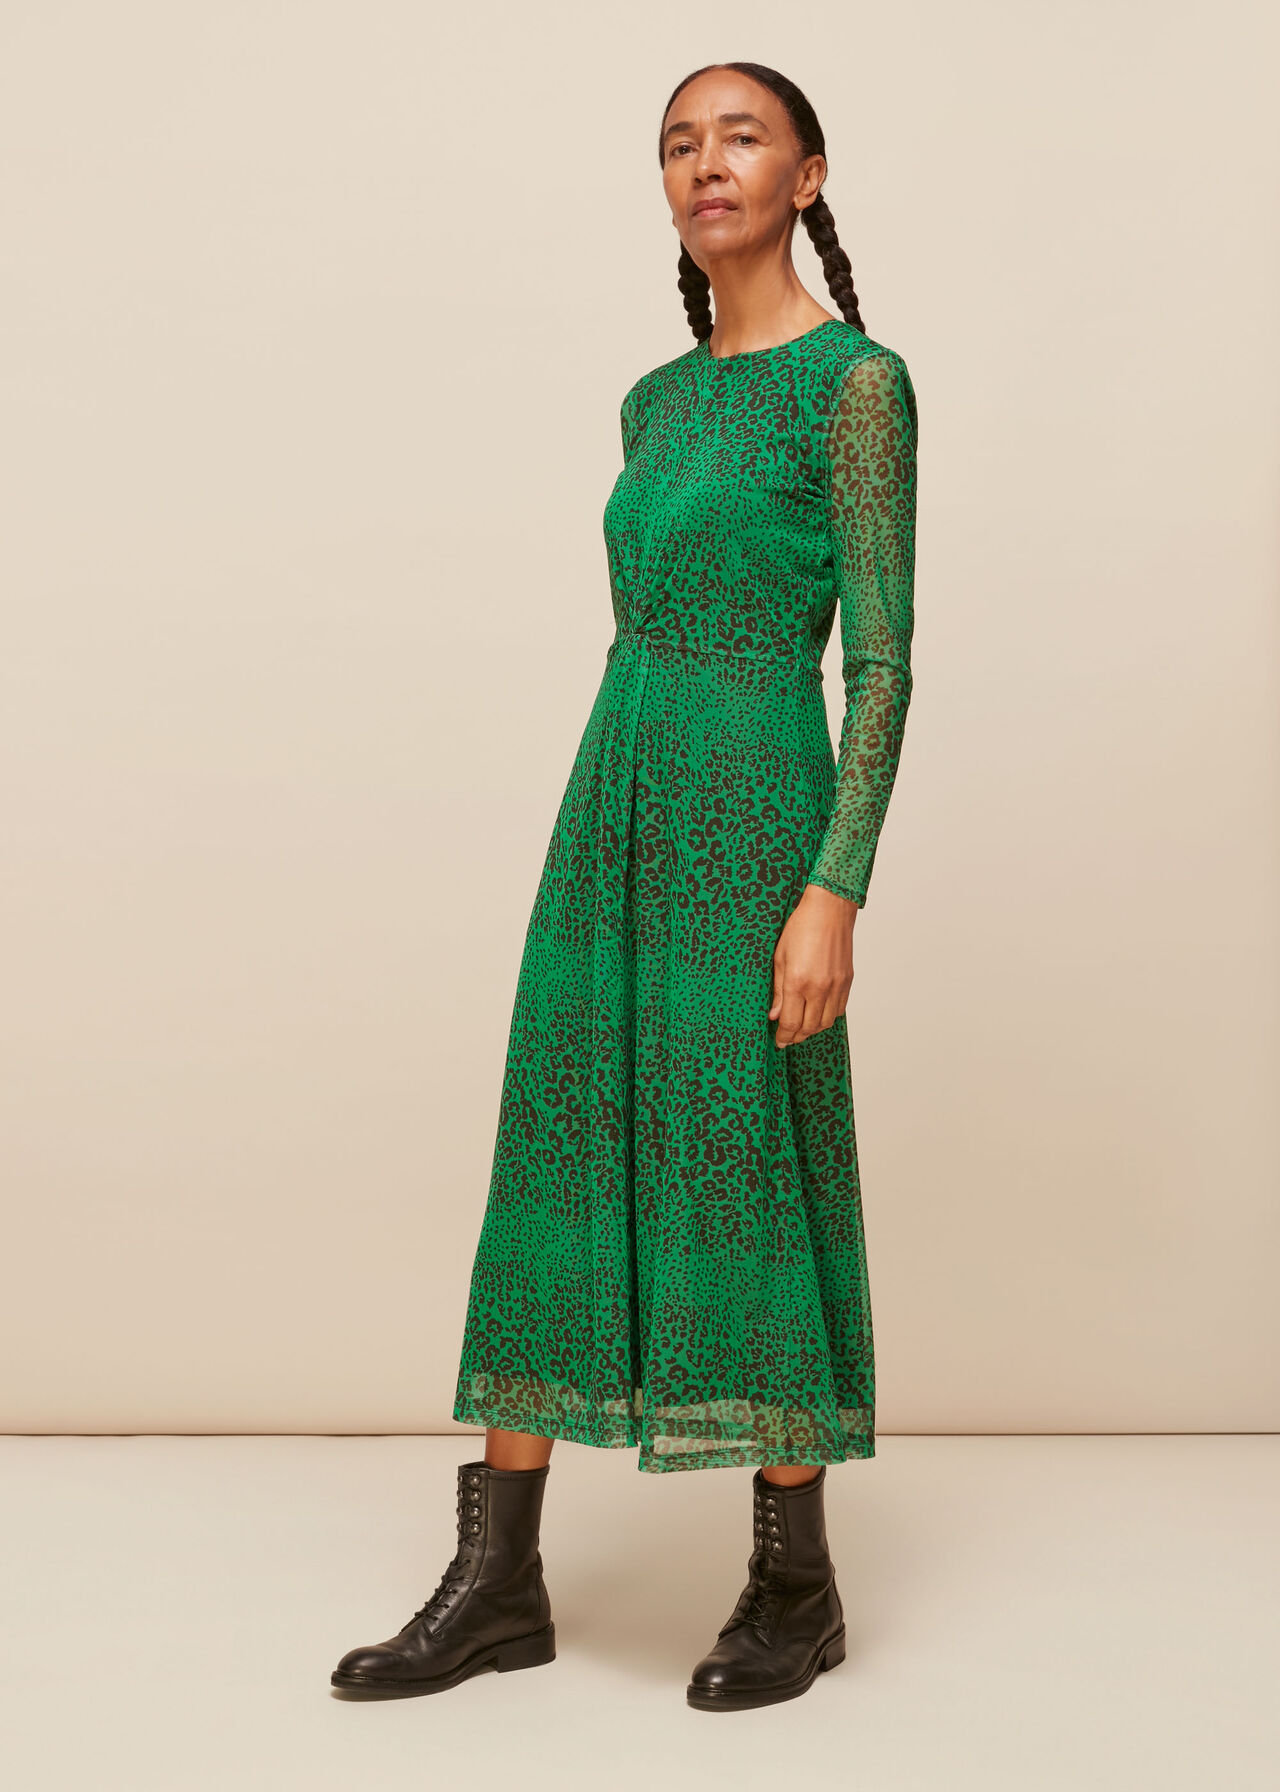 grænse badning Dangle Green/Multi Speckled Animal Print Mesh Dress | WHISTLES 